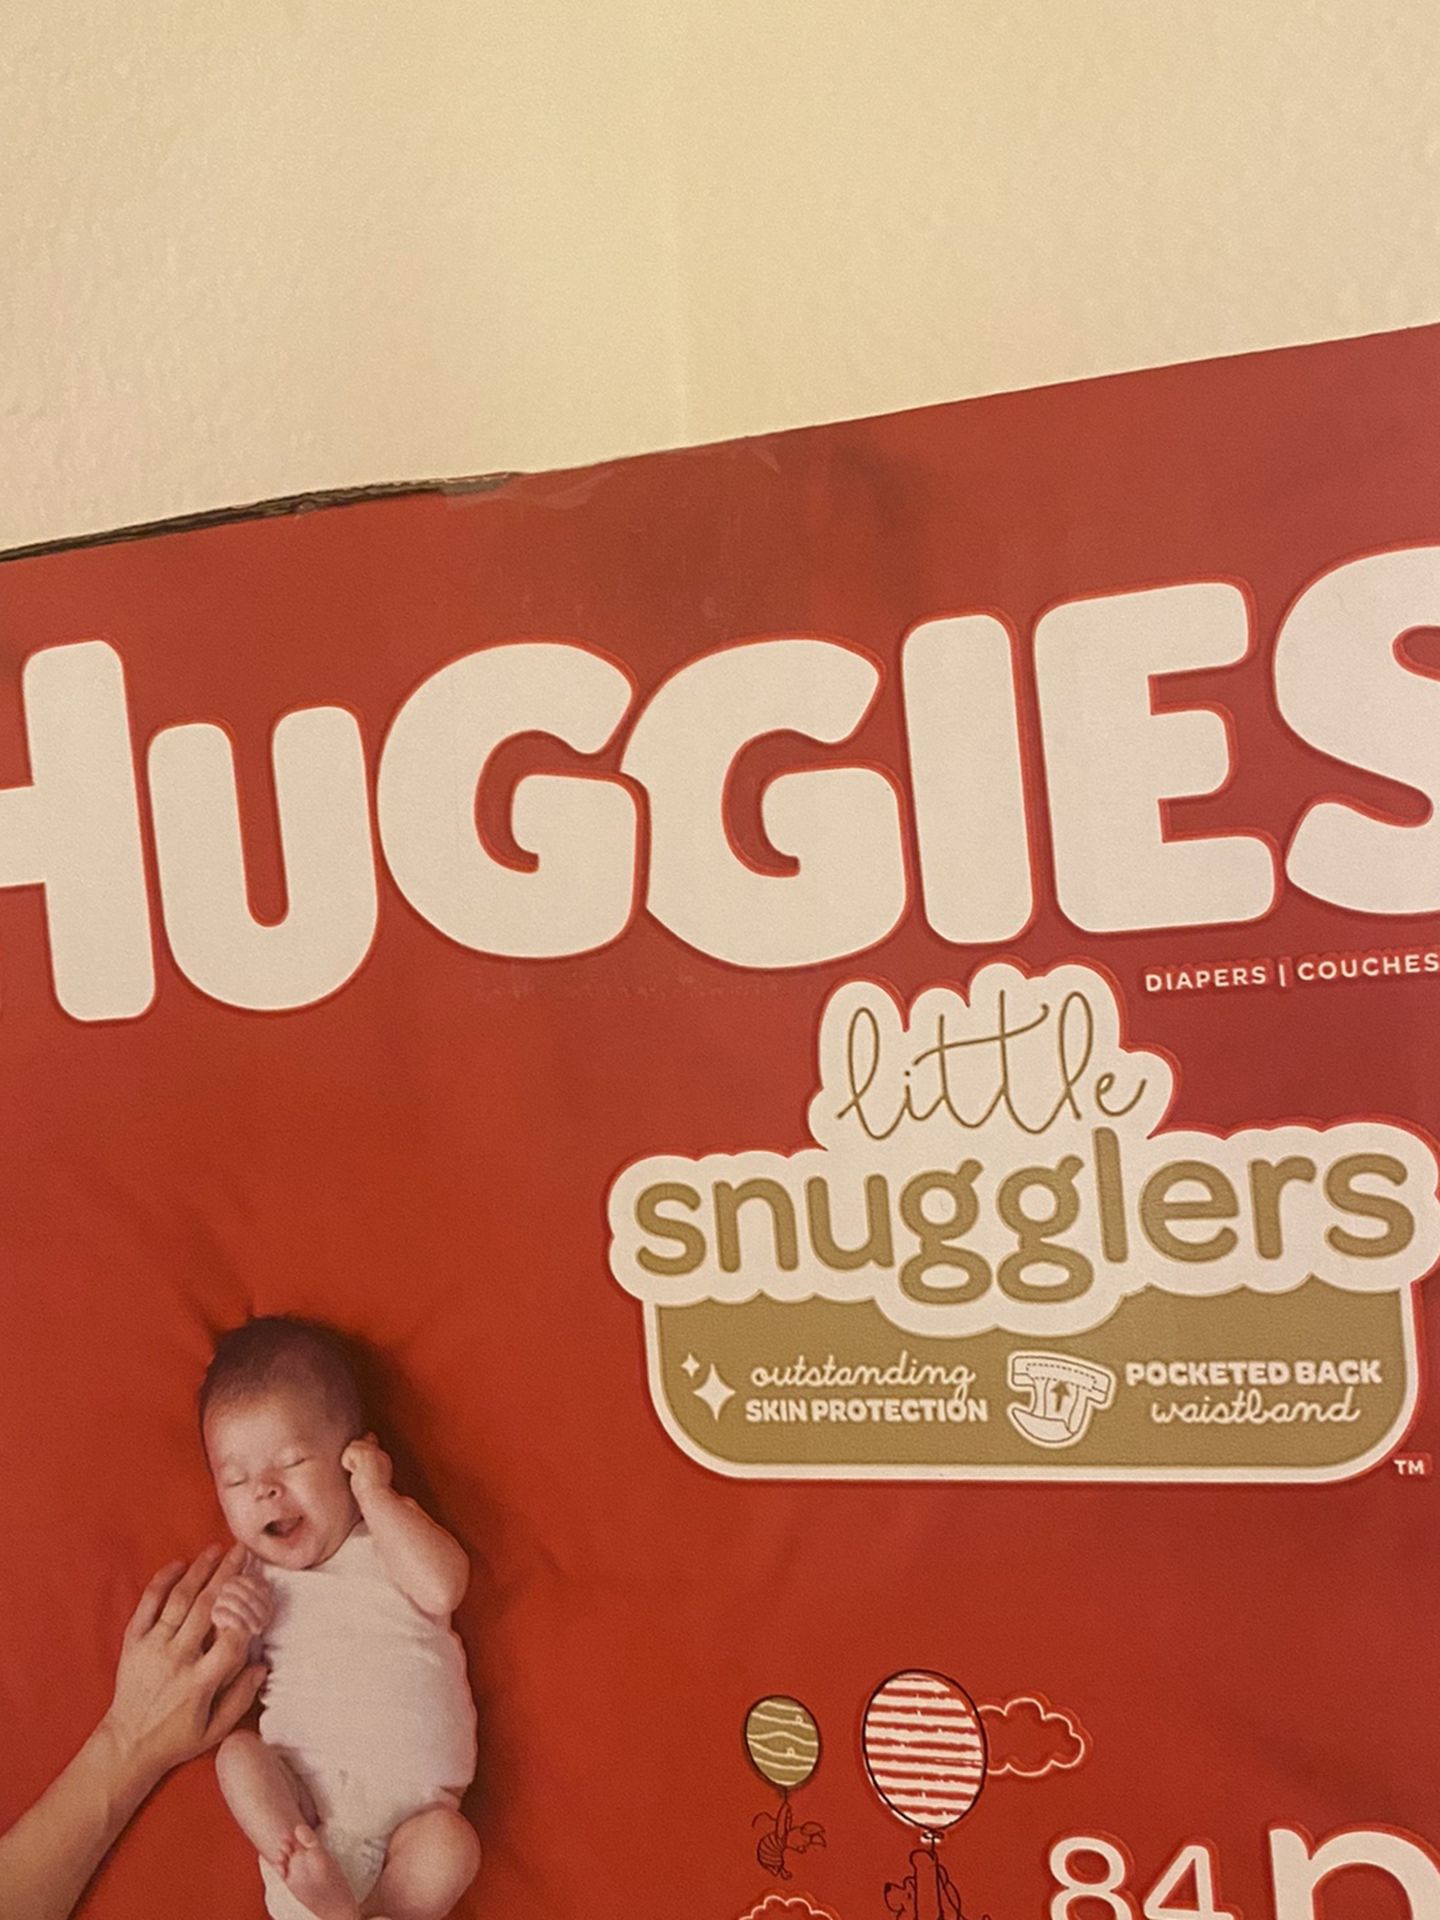 Newborn Huggies